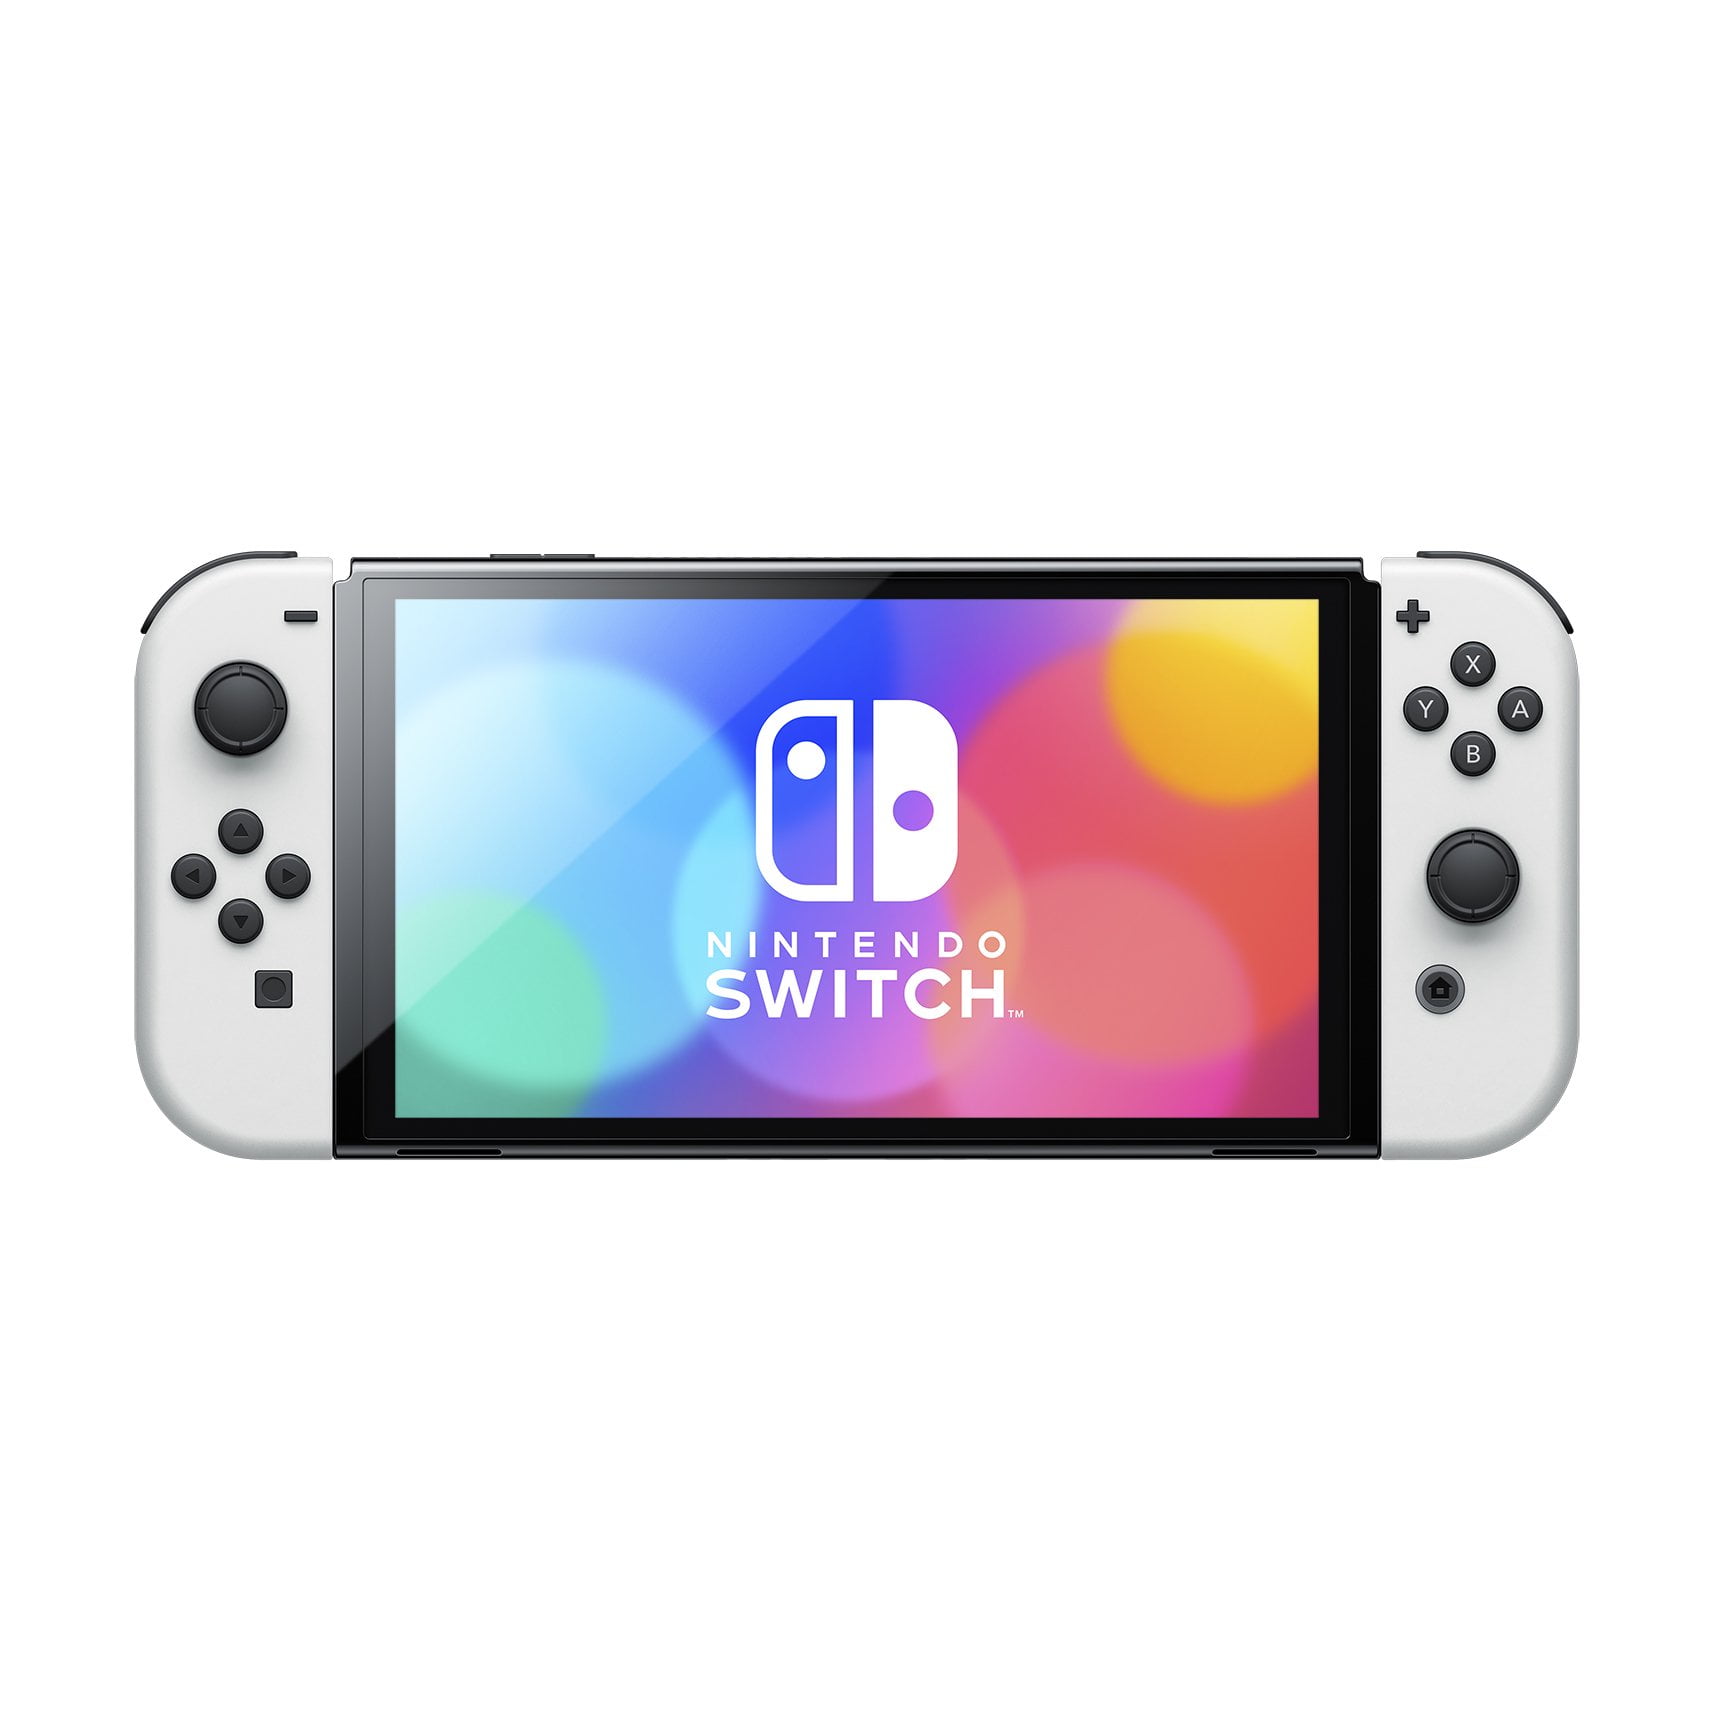 Nintendo Switch OLED Model w/ Neon Red & Neon Blue Joy-Con Console -  International Spec (Functional in US) NEW